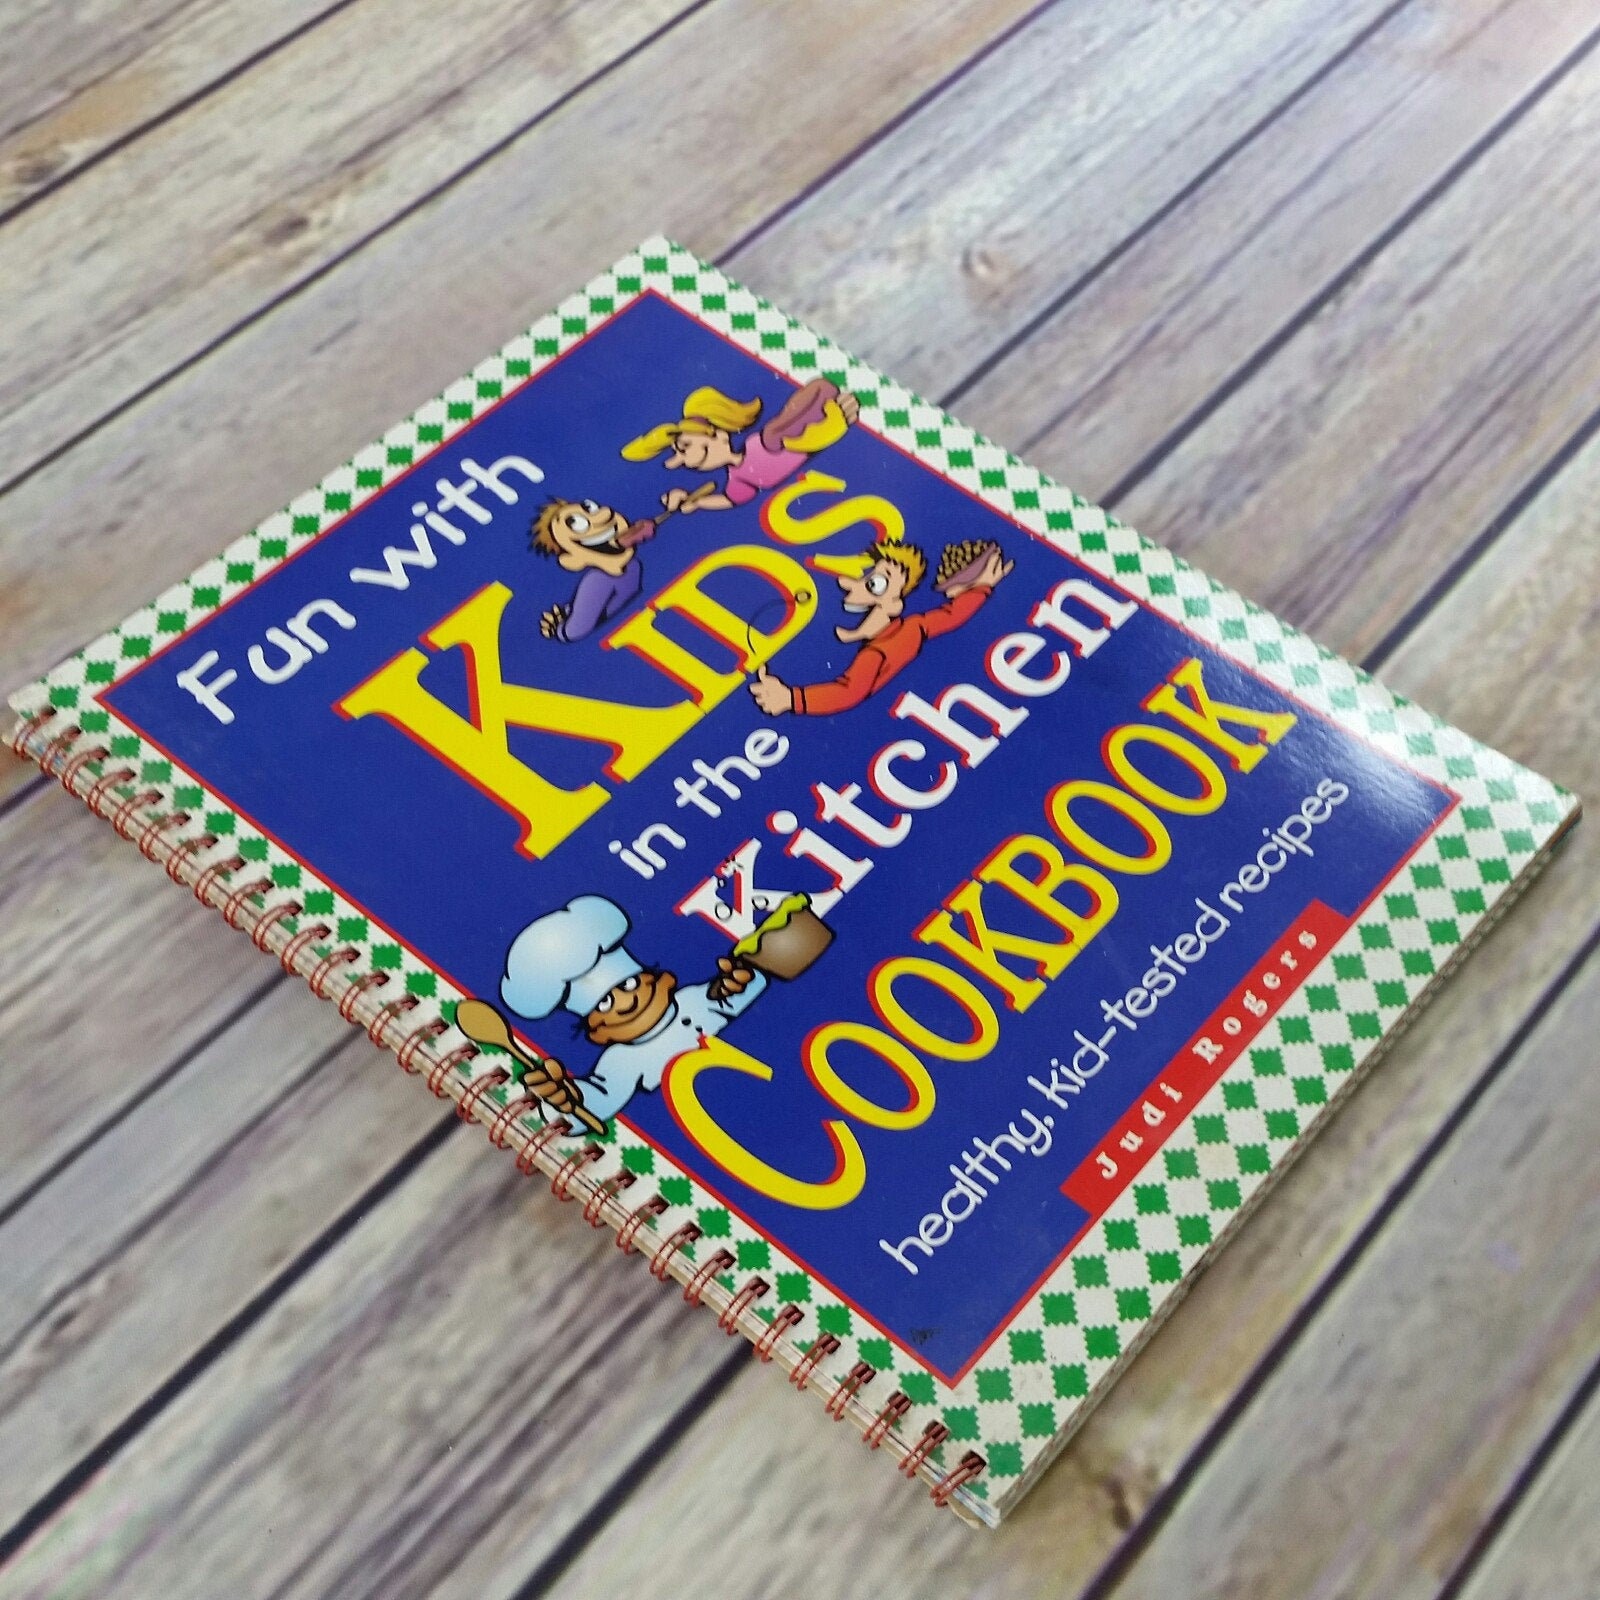 Fun with Kids in the Kitchen, Spiral Kid Recipes Judi Rogers